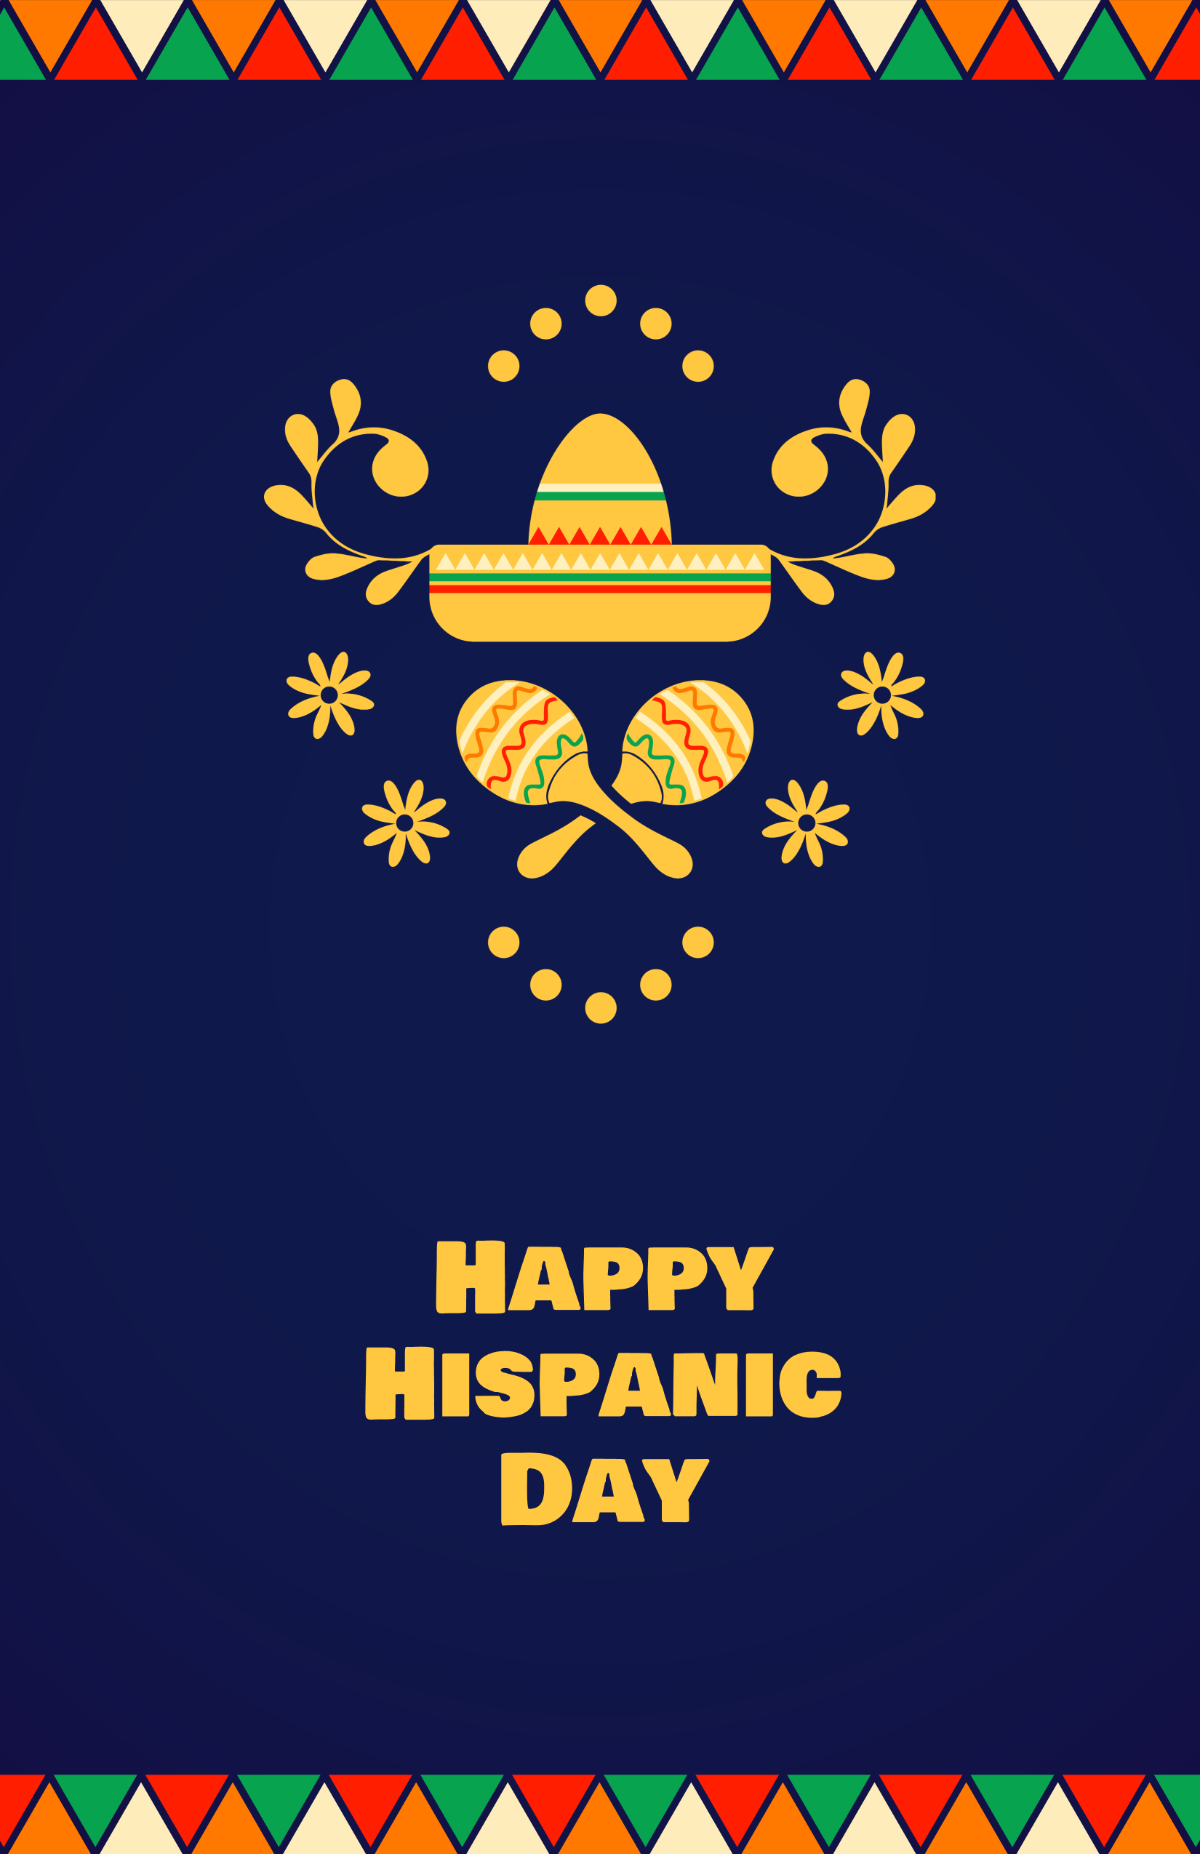 Free Hispanic Day Poster Template